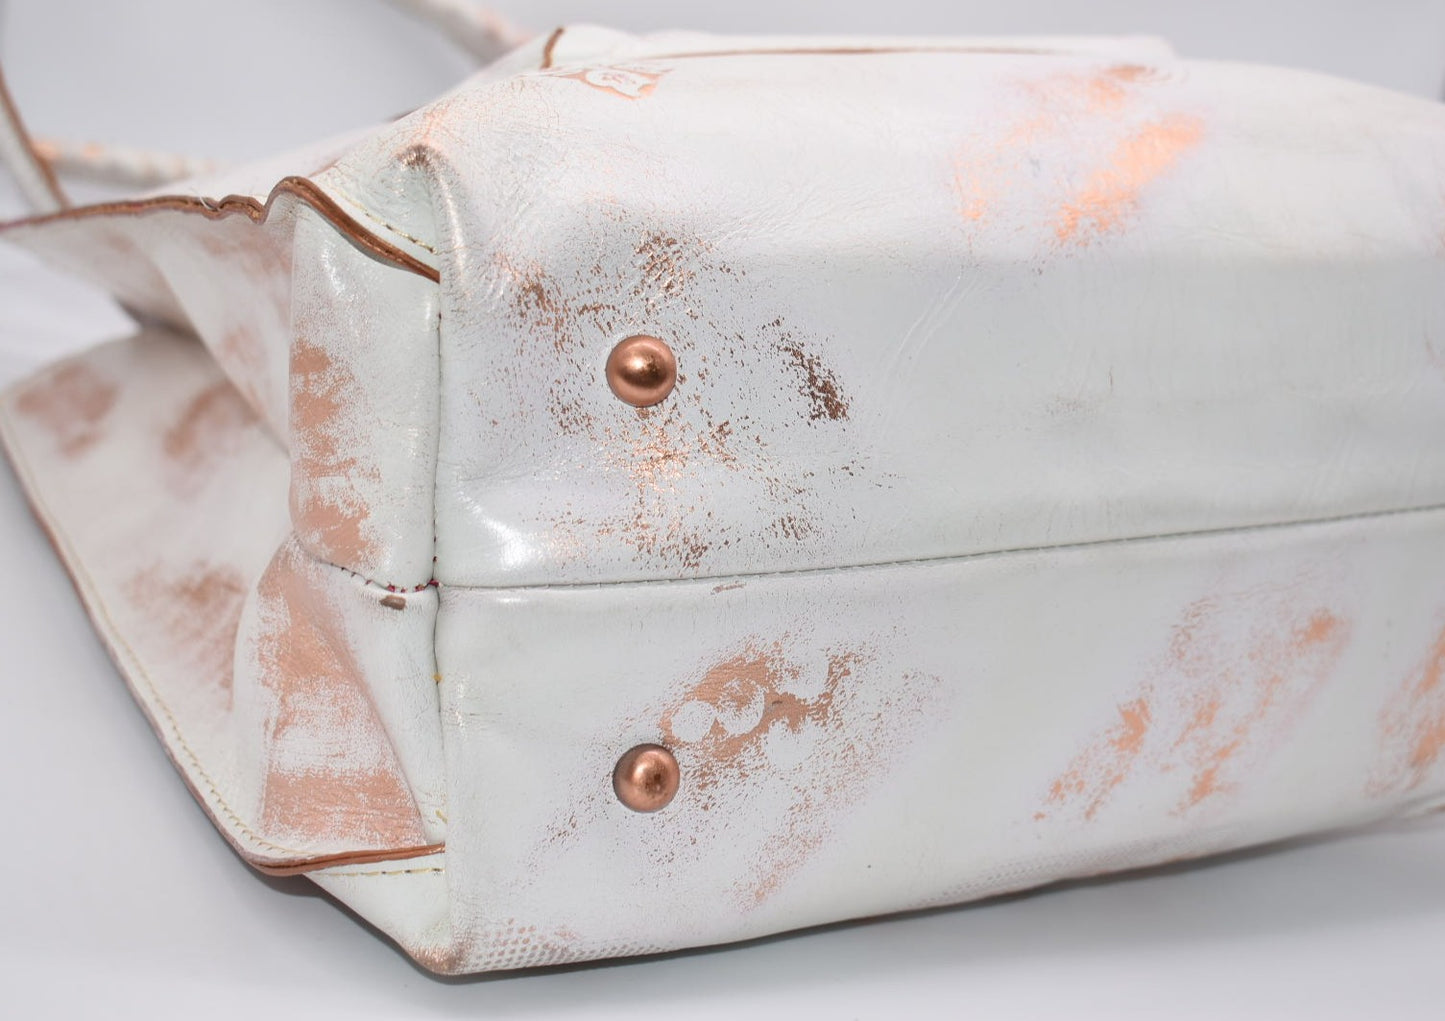 Patricia Nash Cavo Tote Bag in Tooled Pink White Metallic